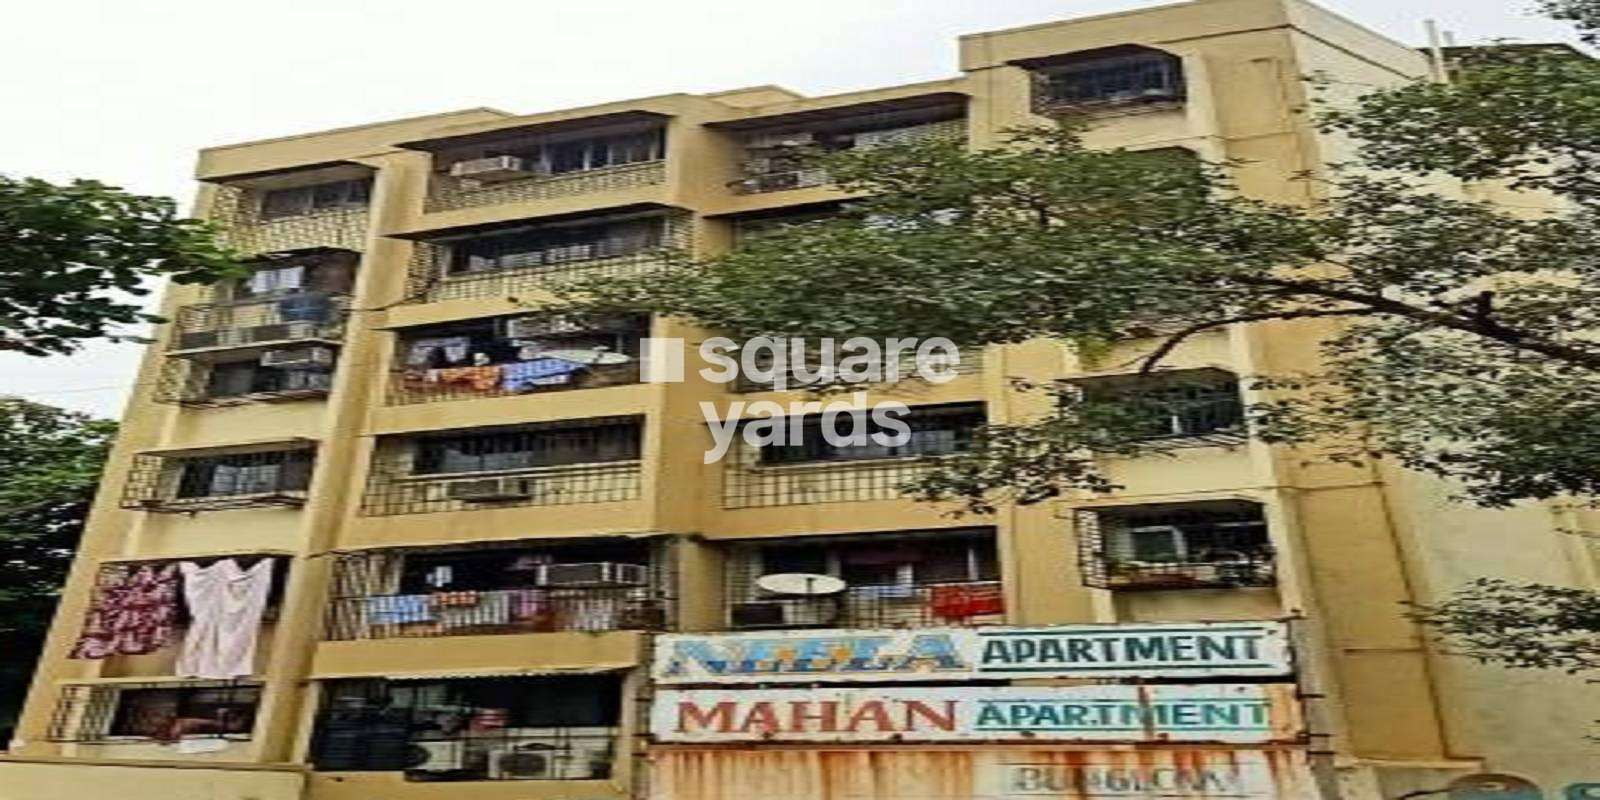 Mahan Apartment Dahisar Cover Image